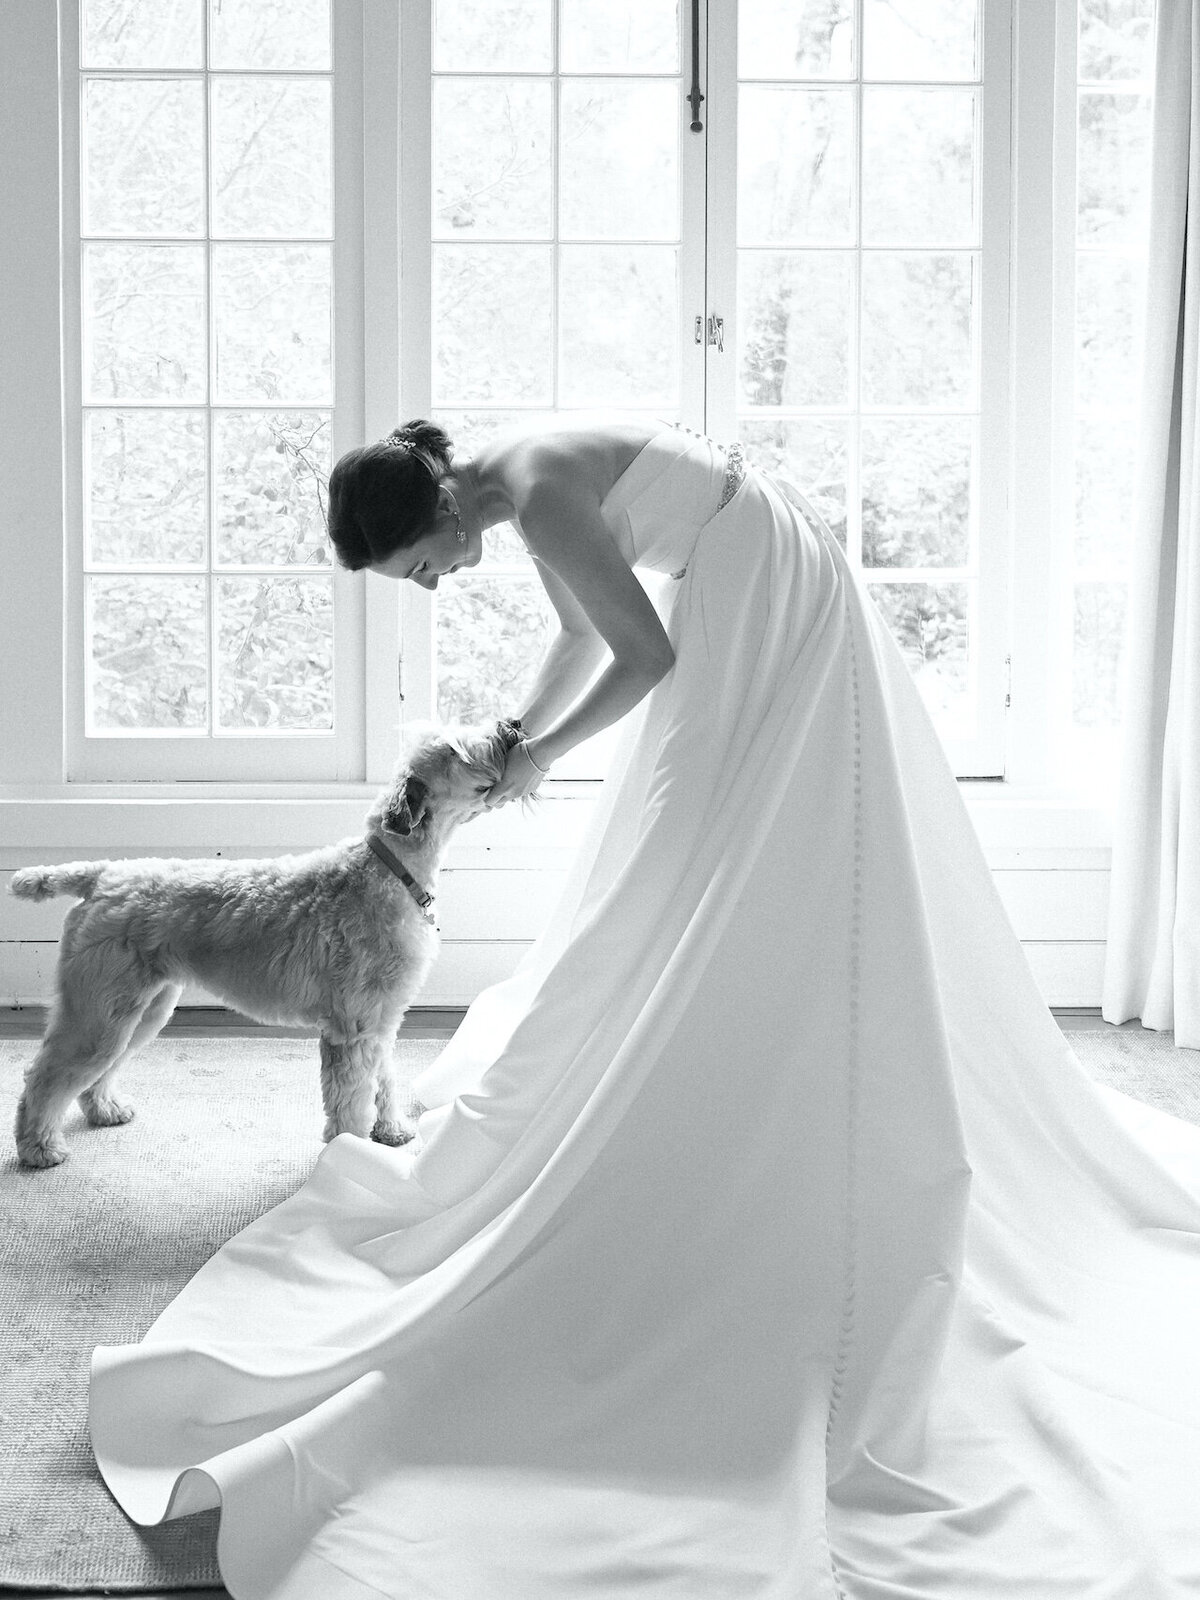 Classic Black and White Wedding Photographs Robert Aveau for © Bonnie Sen Photography